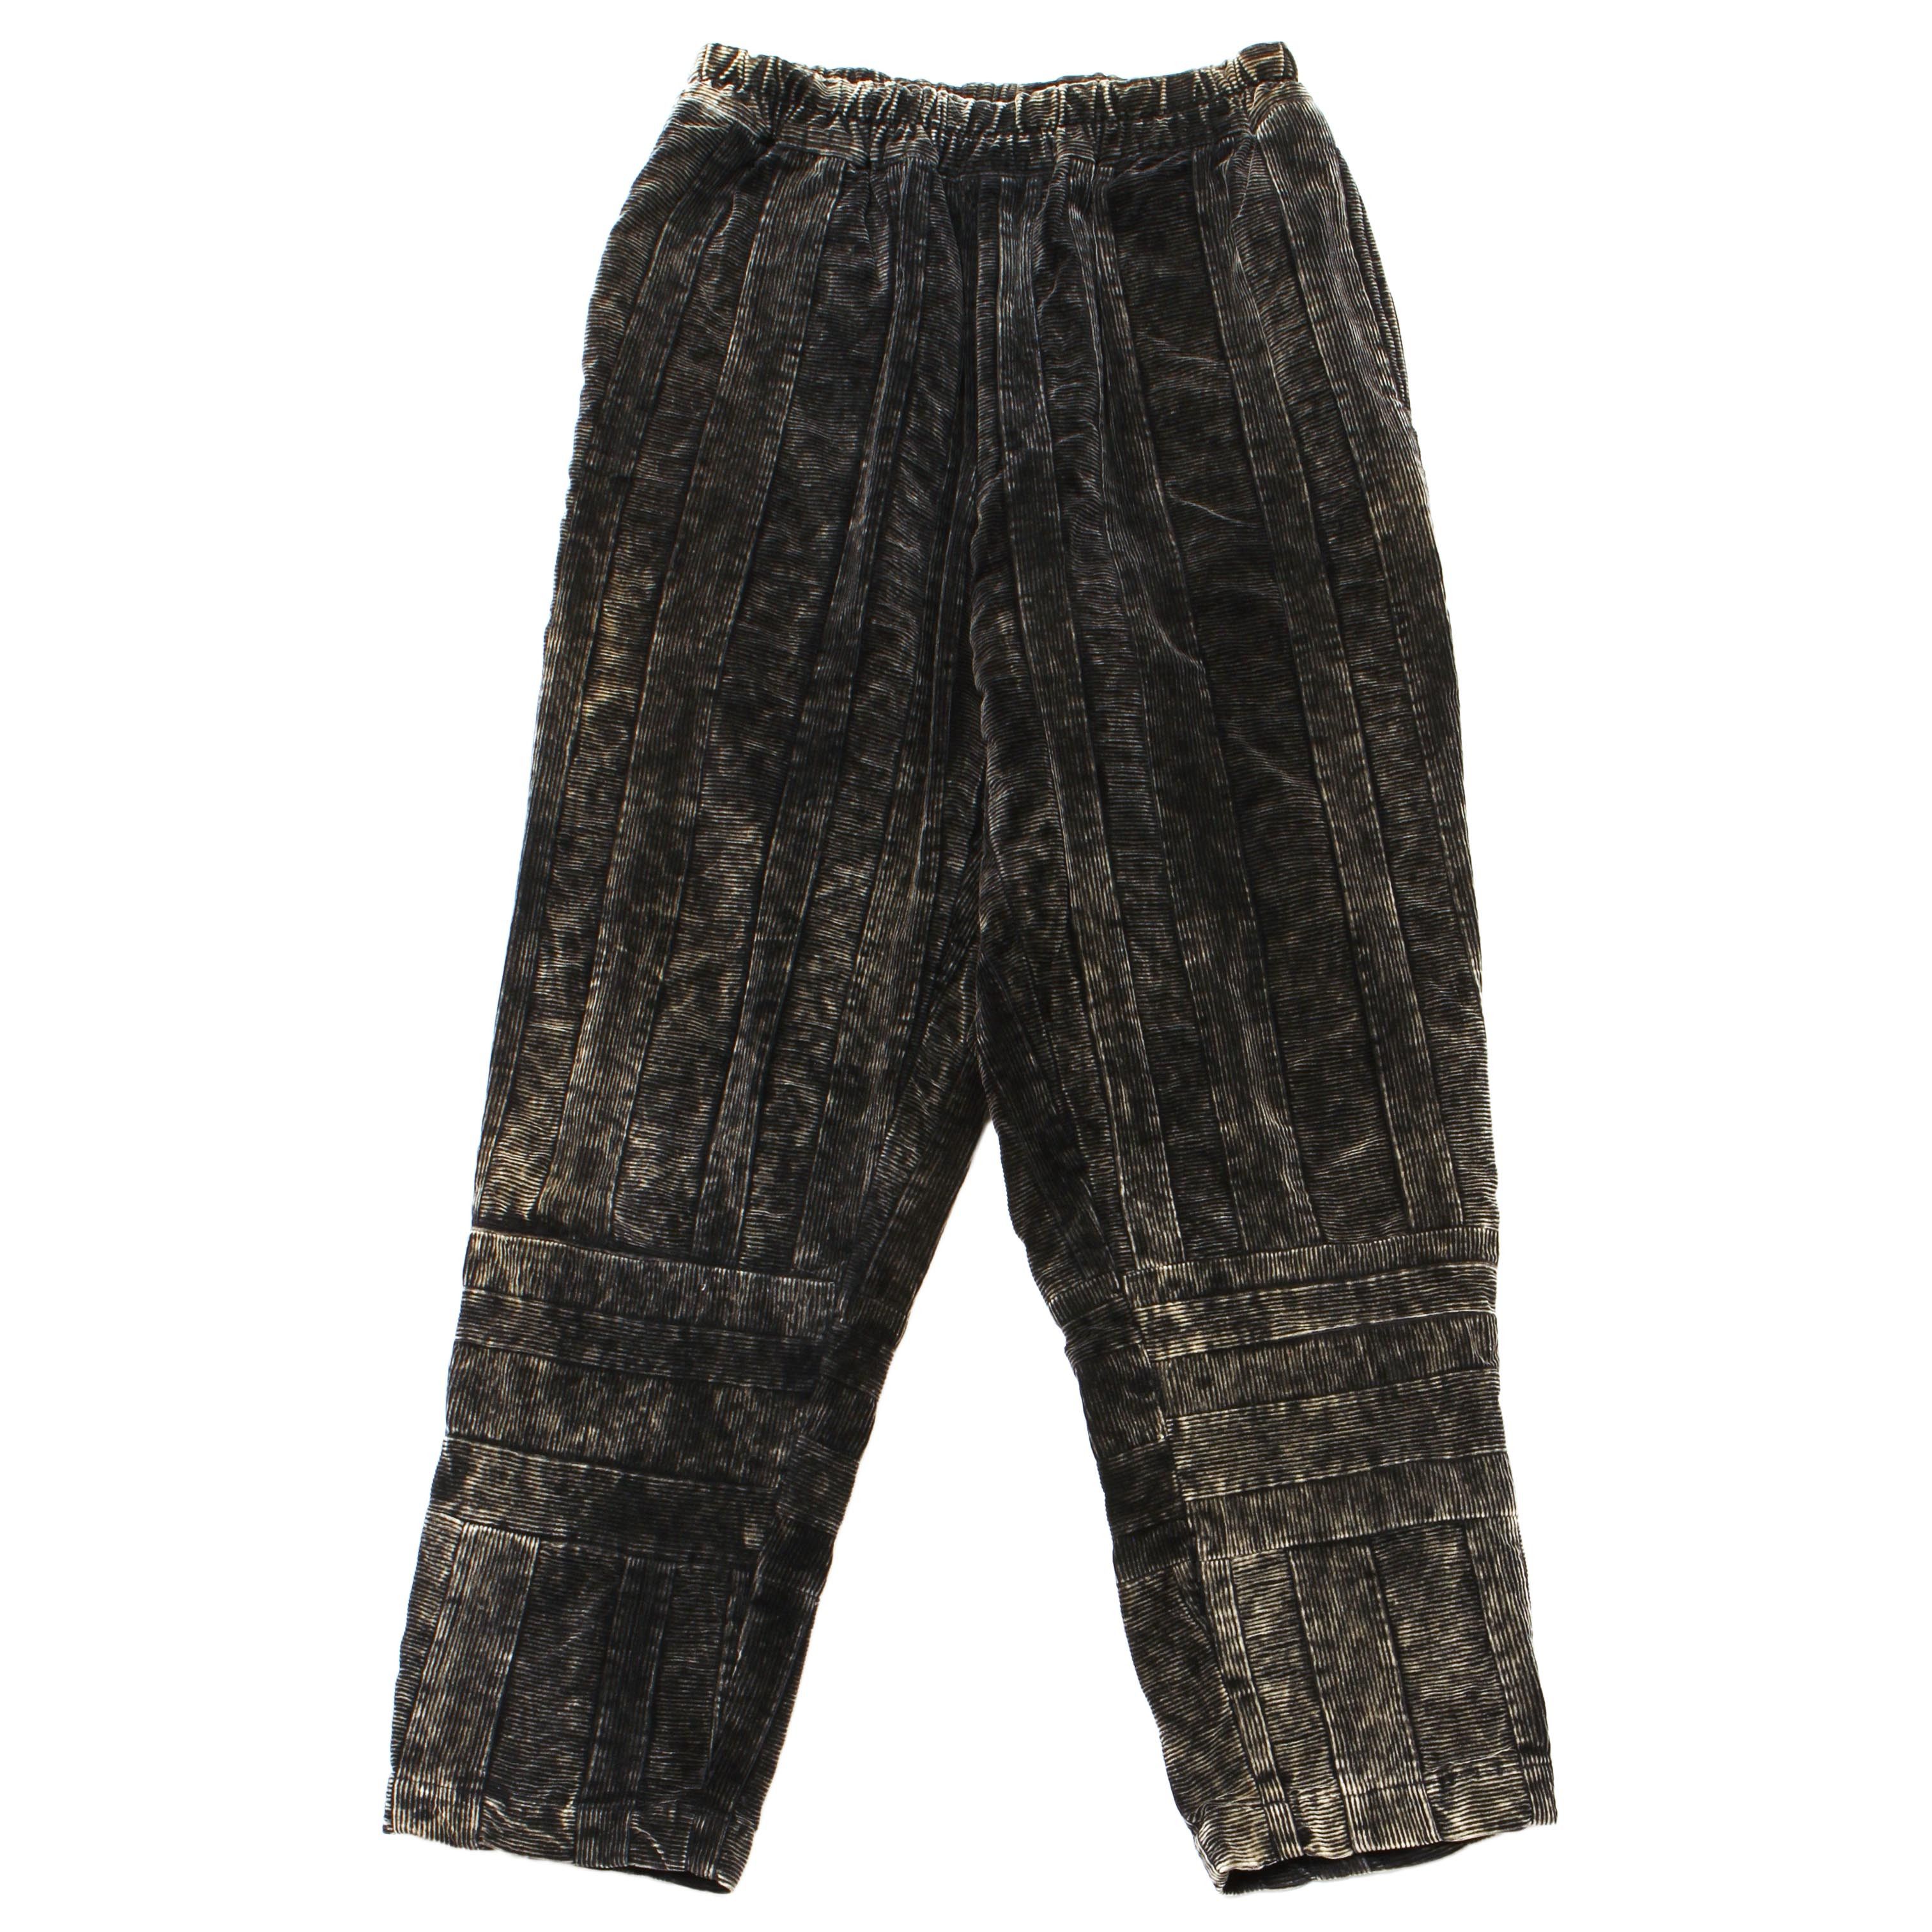 AW93 Cotton Corduroy Pants - 1